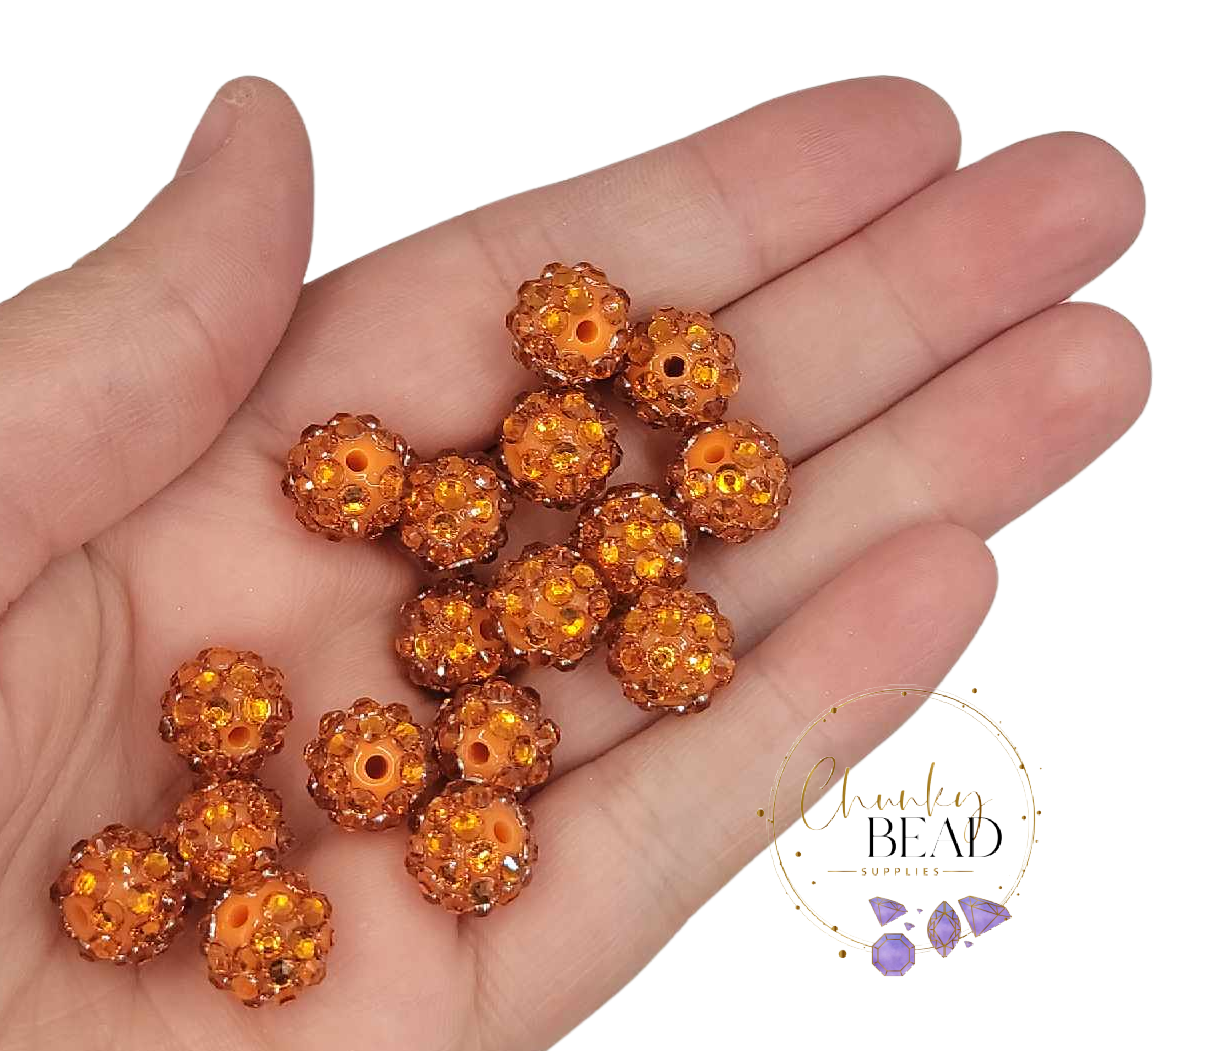 12mm "Orange" Foil Rhinestone Acrylic Beads